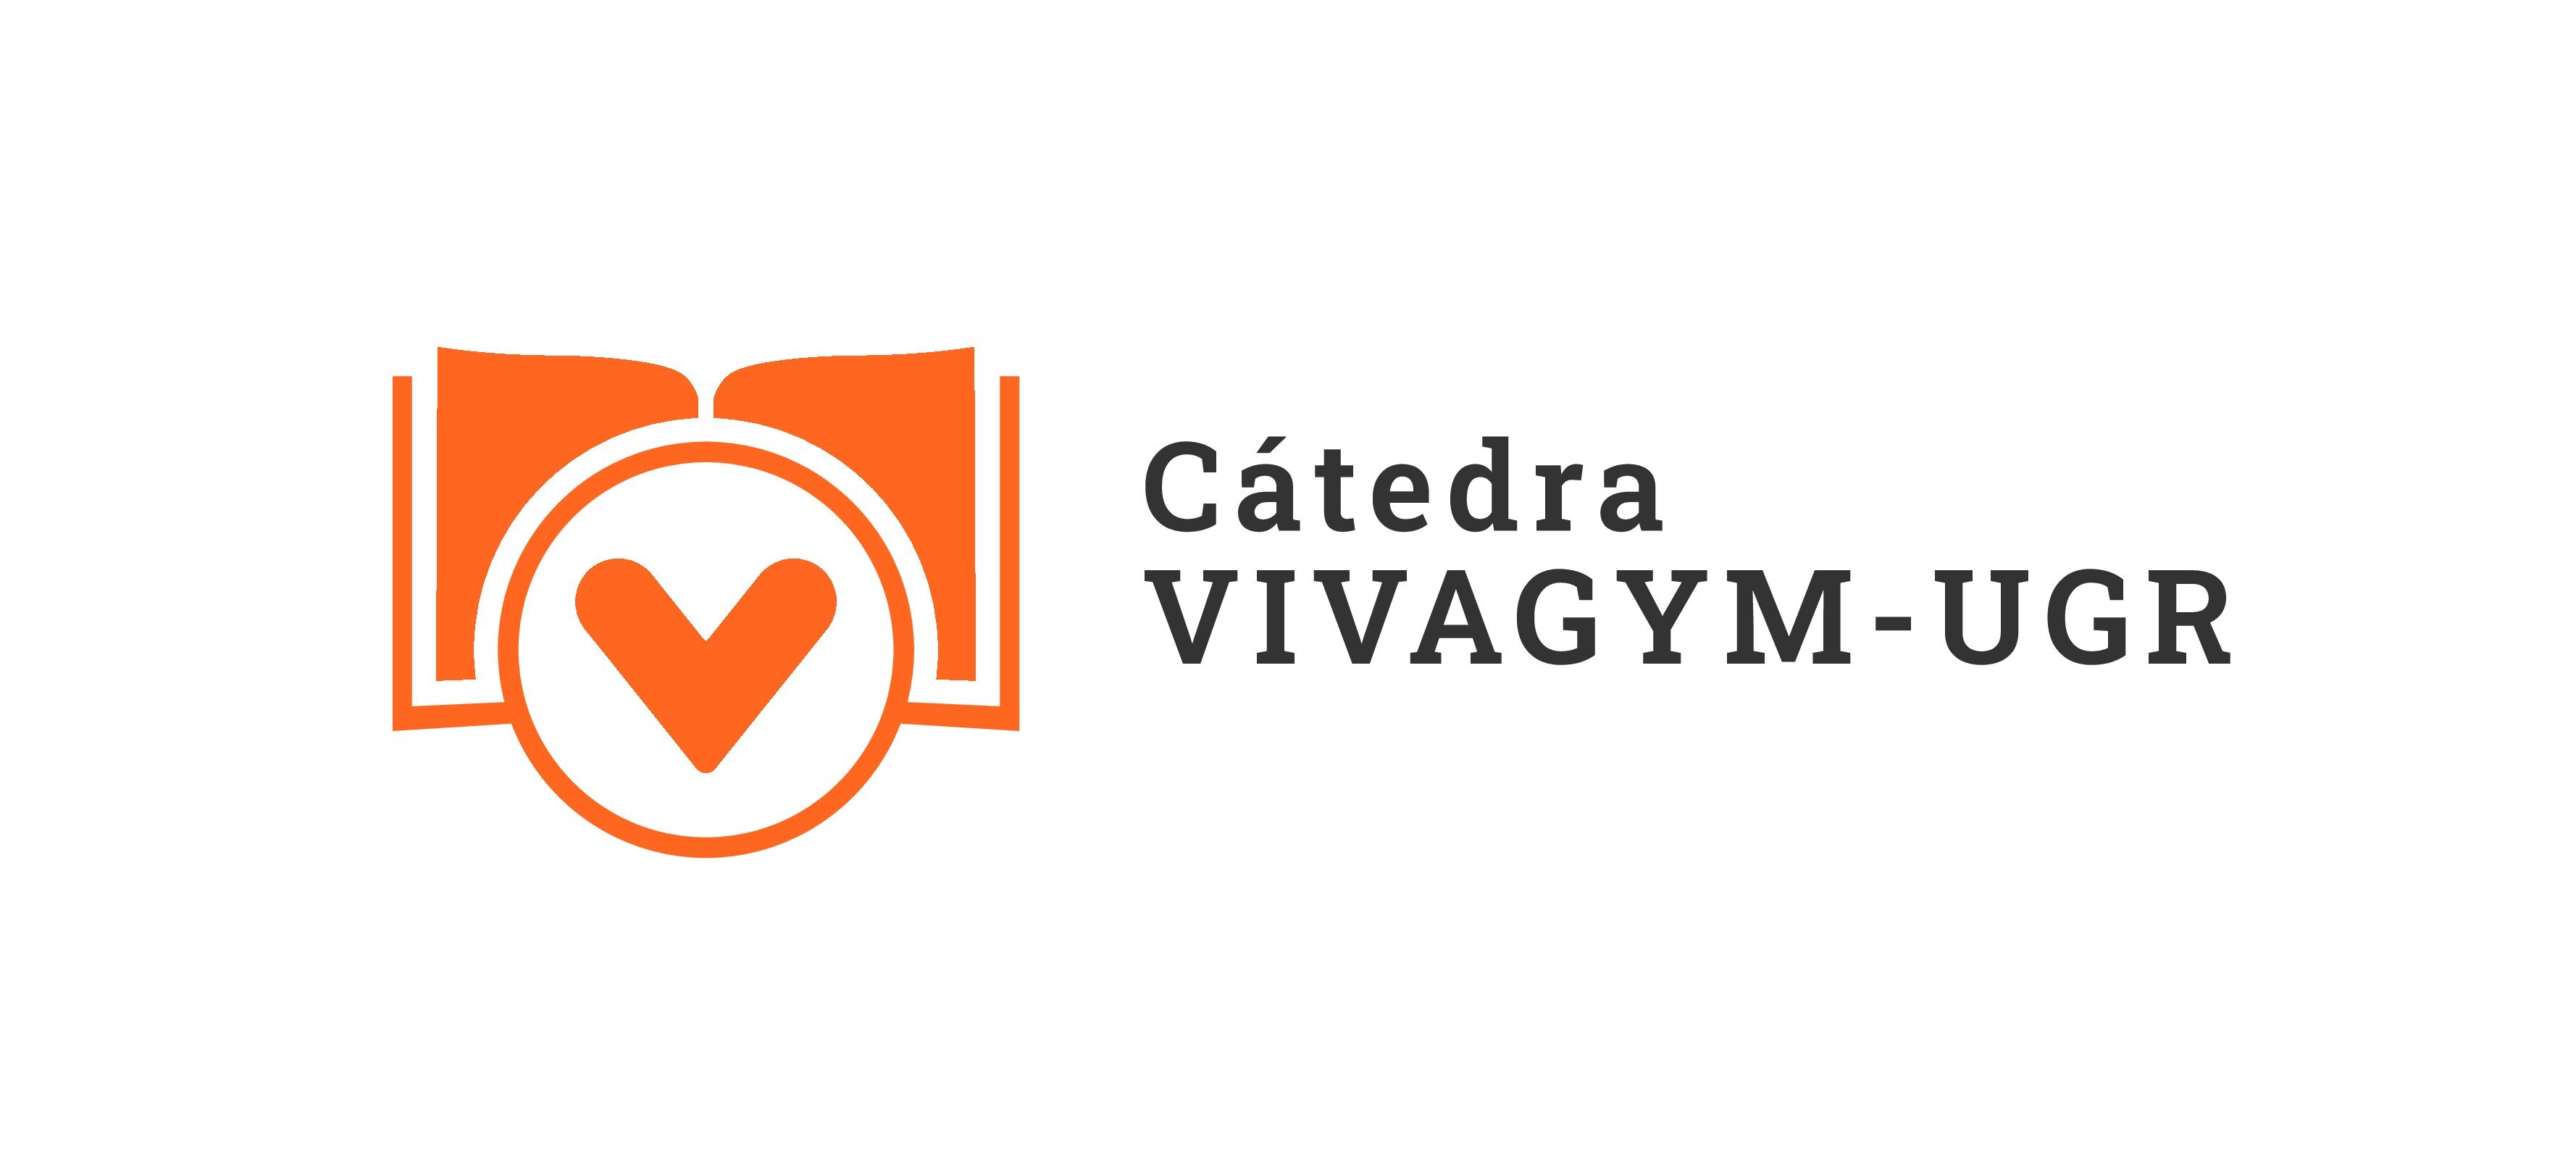 catedra vivagym